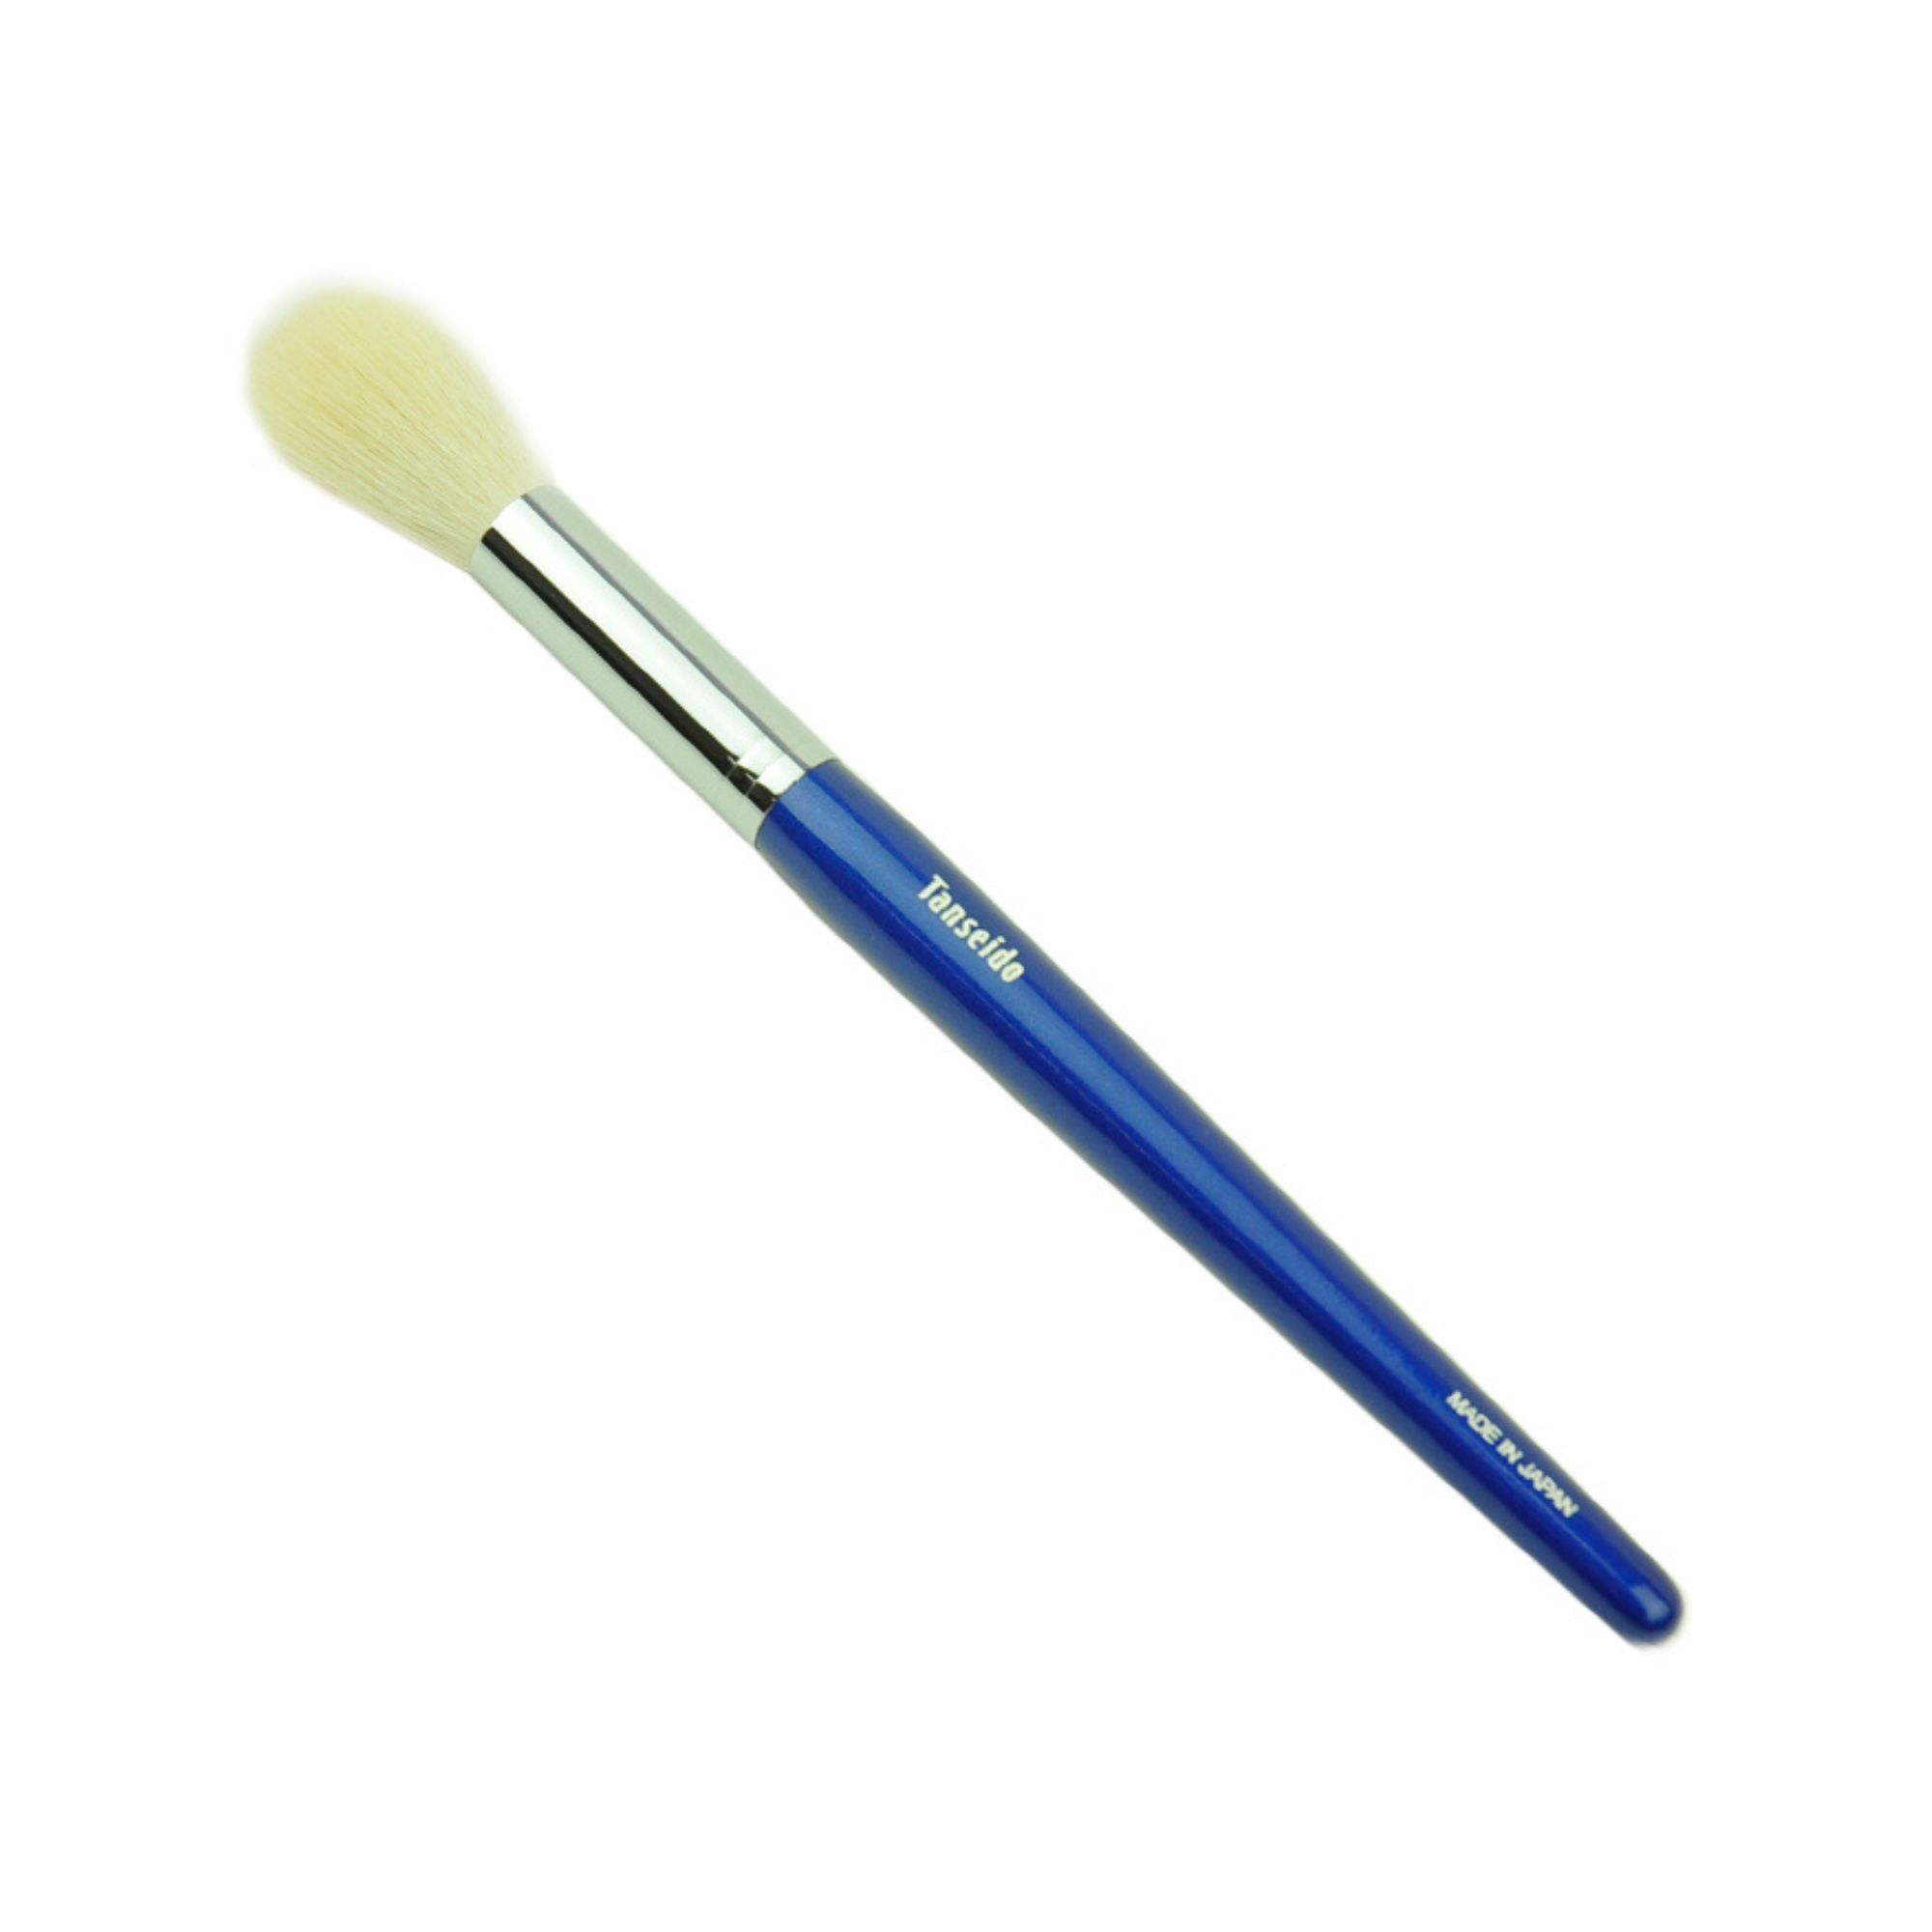 Tanseido YWC17 Cheek Brush - Fude Beauty, Japanese Makeup Brushes